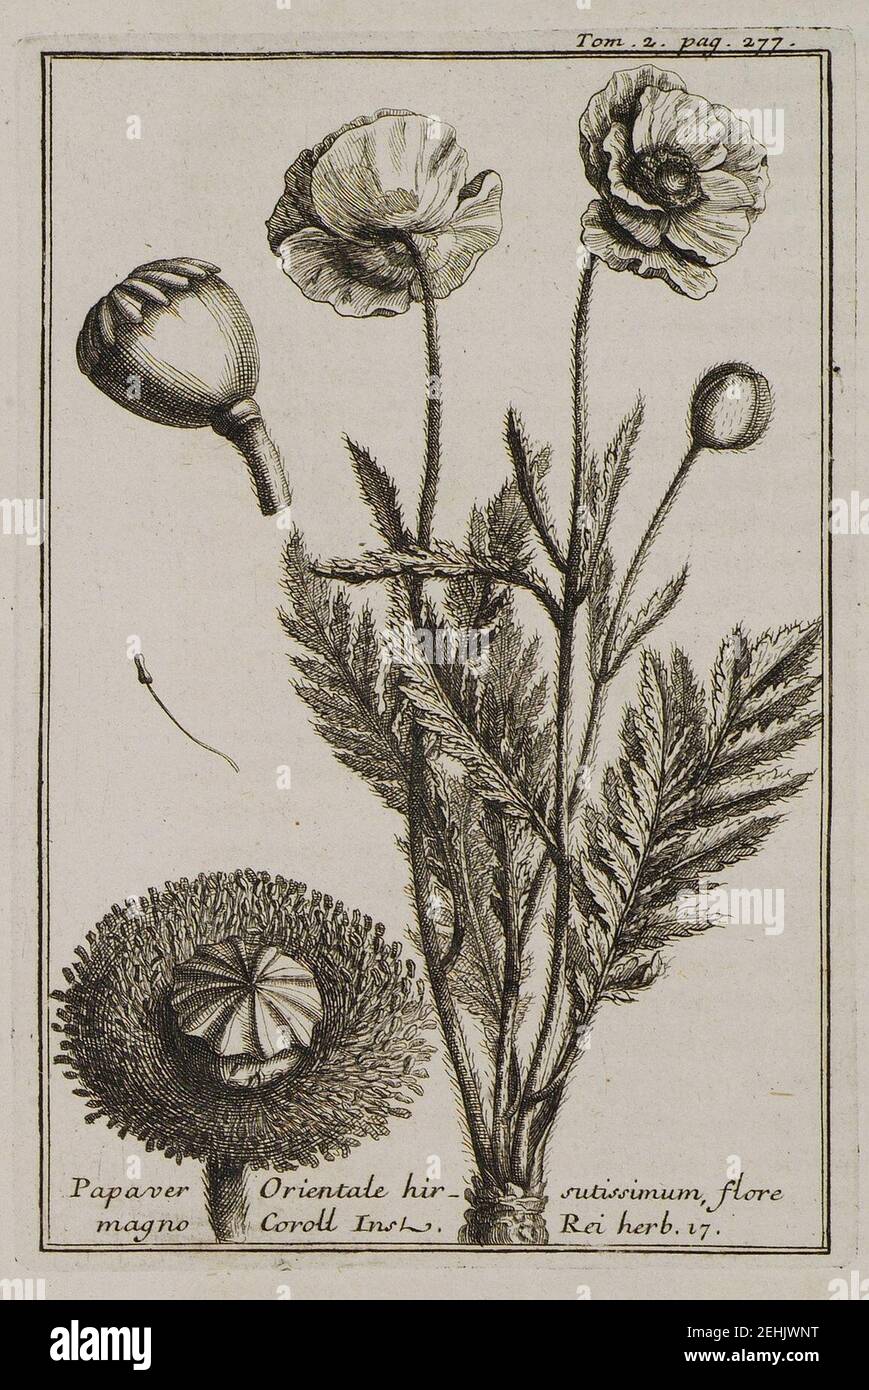 Papaver Orientale hirsutissimum, flore magno Coroll Inst Rei herb 17 - Tournefort Joseph Pitton De - 1717. Stock Photo